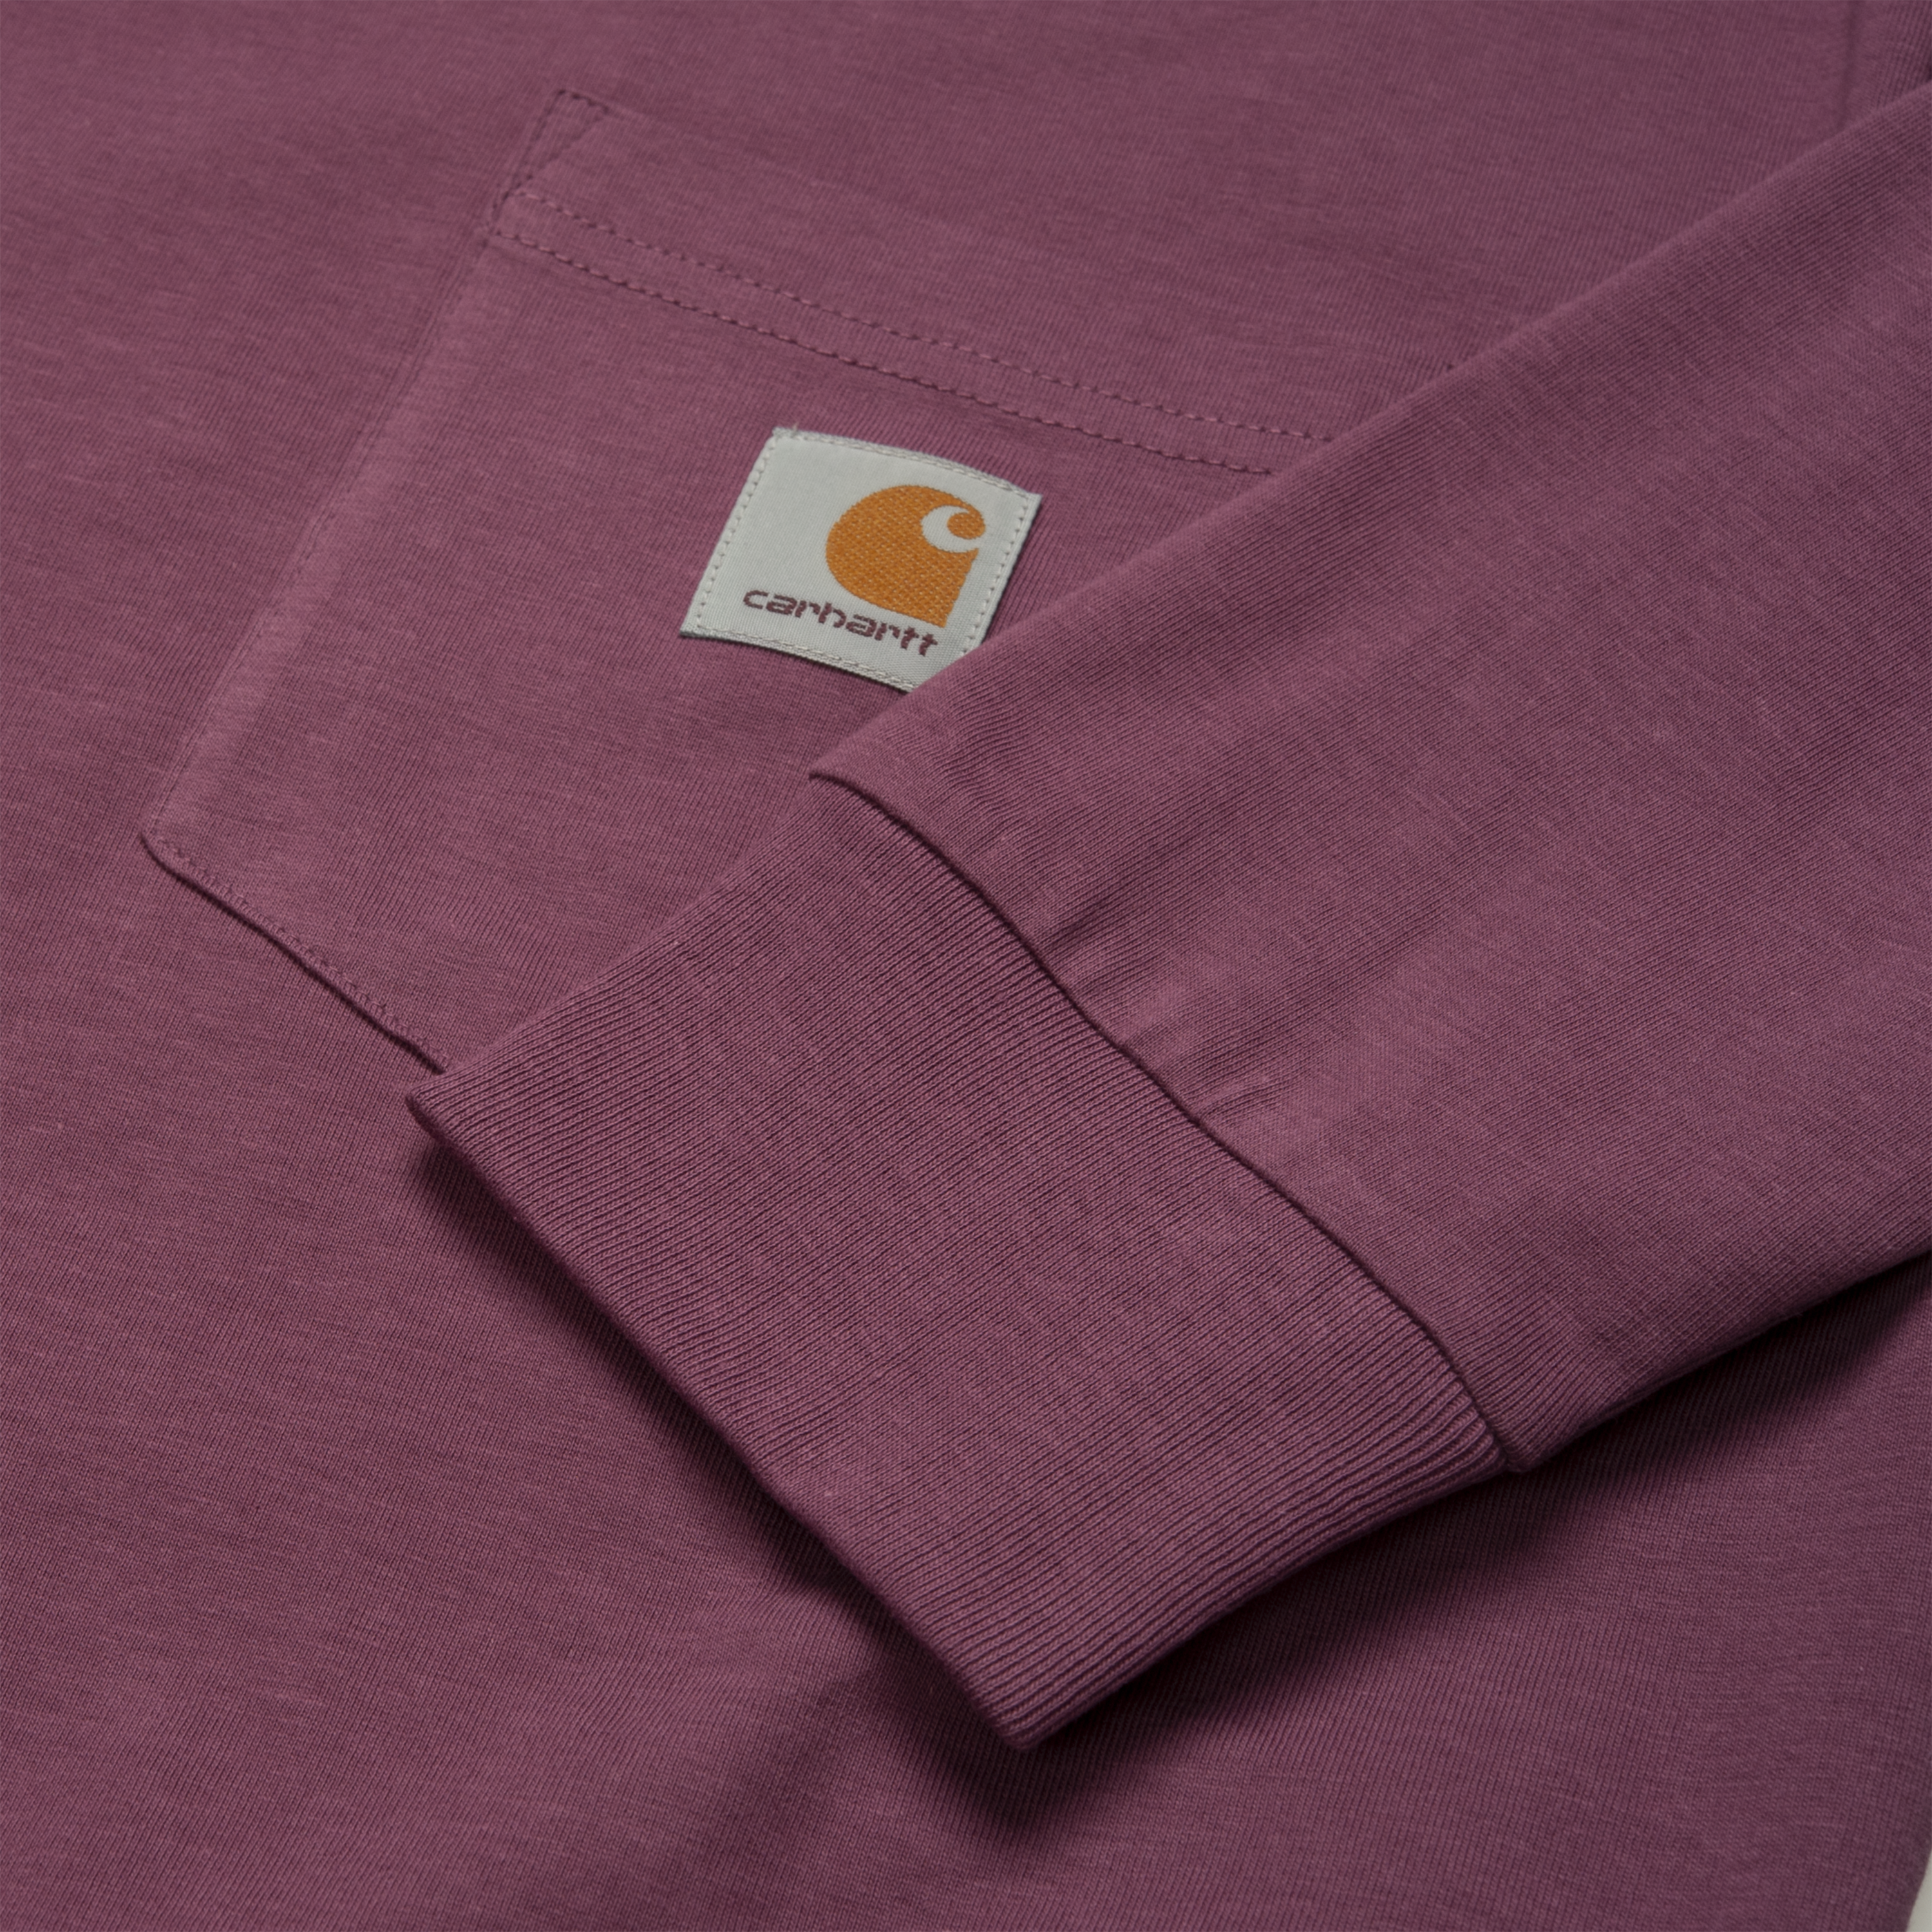 Carhartt Pocket Ls T-Shirt Dusty Fuchsia T-Shirt Long Sleeves Man Violet